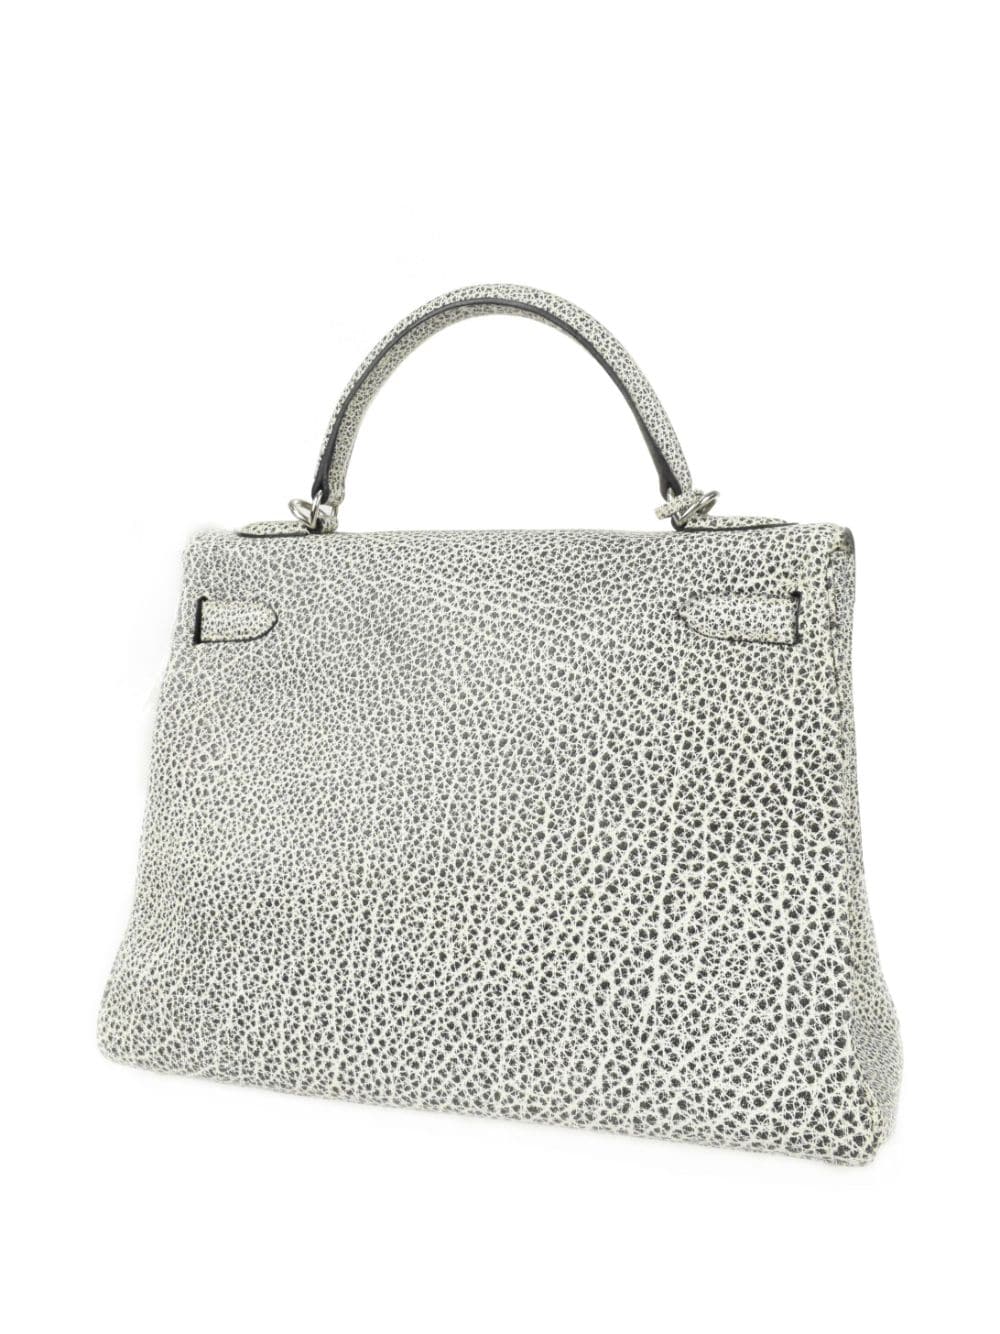 Image 2 of Hermès Pre-Owned 2000 Kelly 32 Retourne handbag